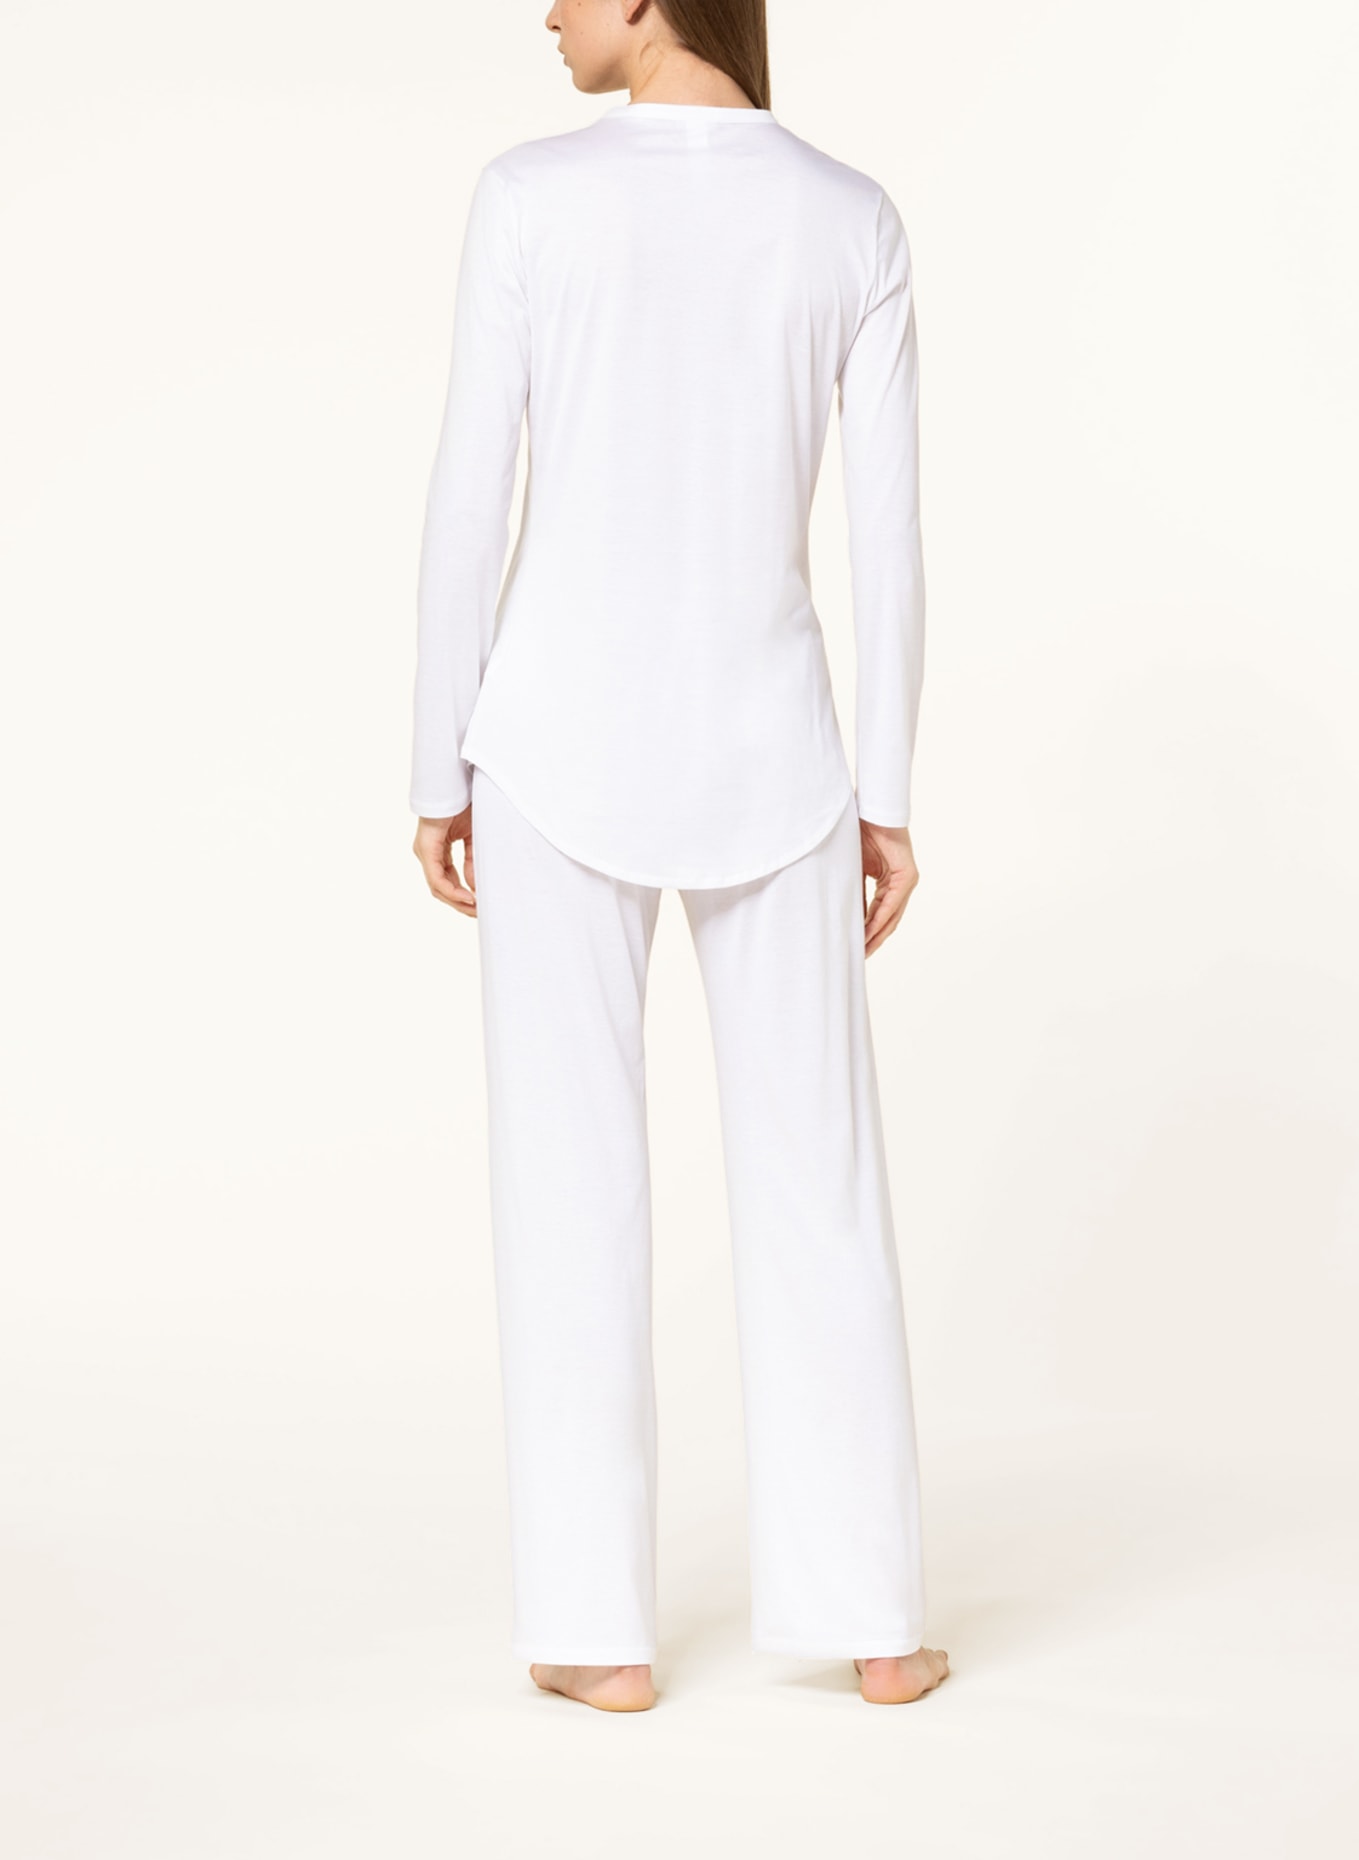 HANRO Pajamas COTTON DELUXE in white | Breuninger